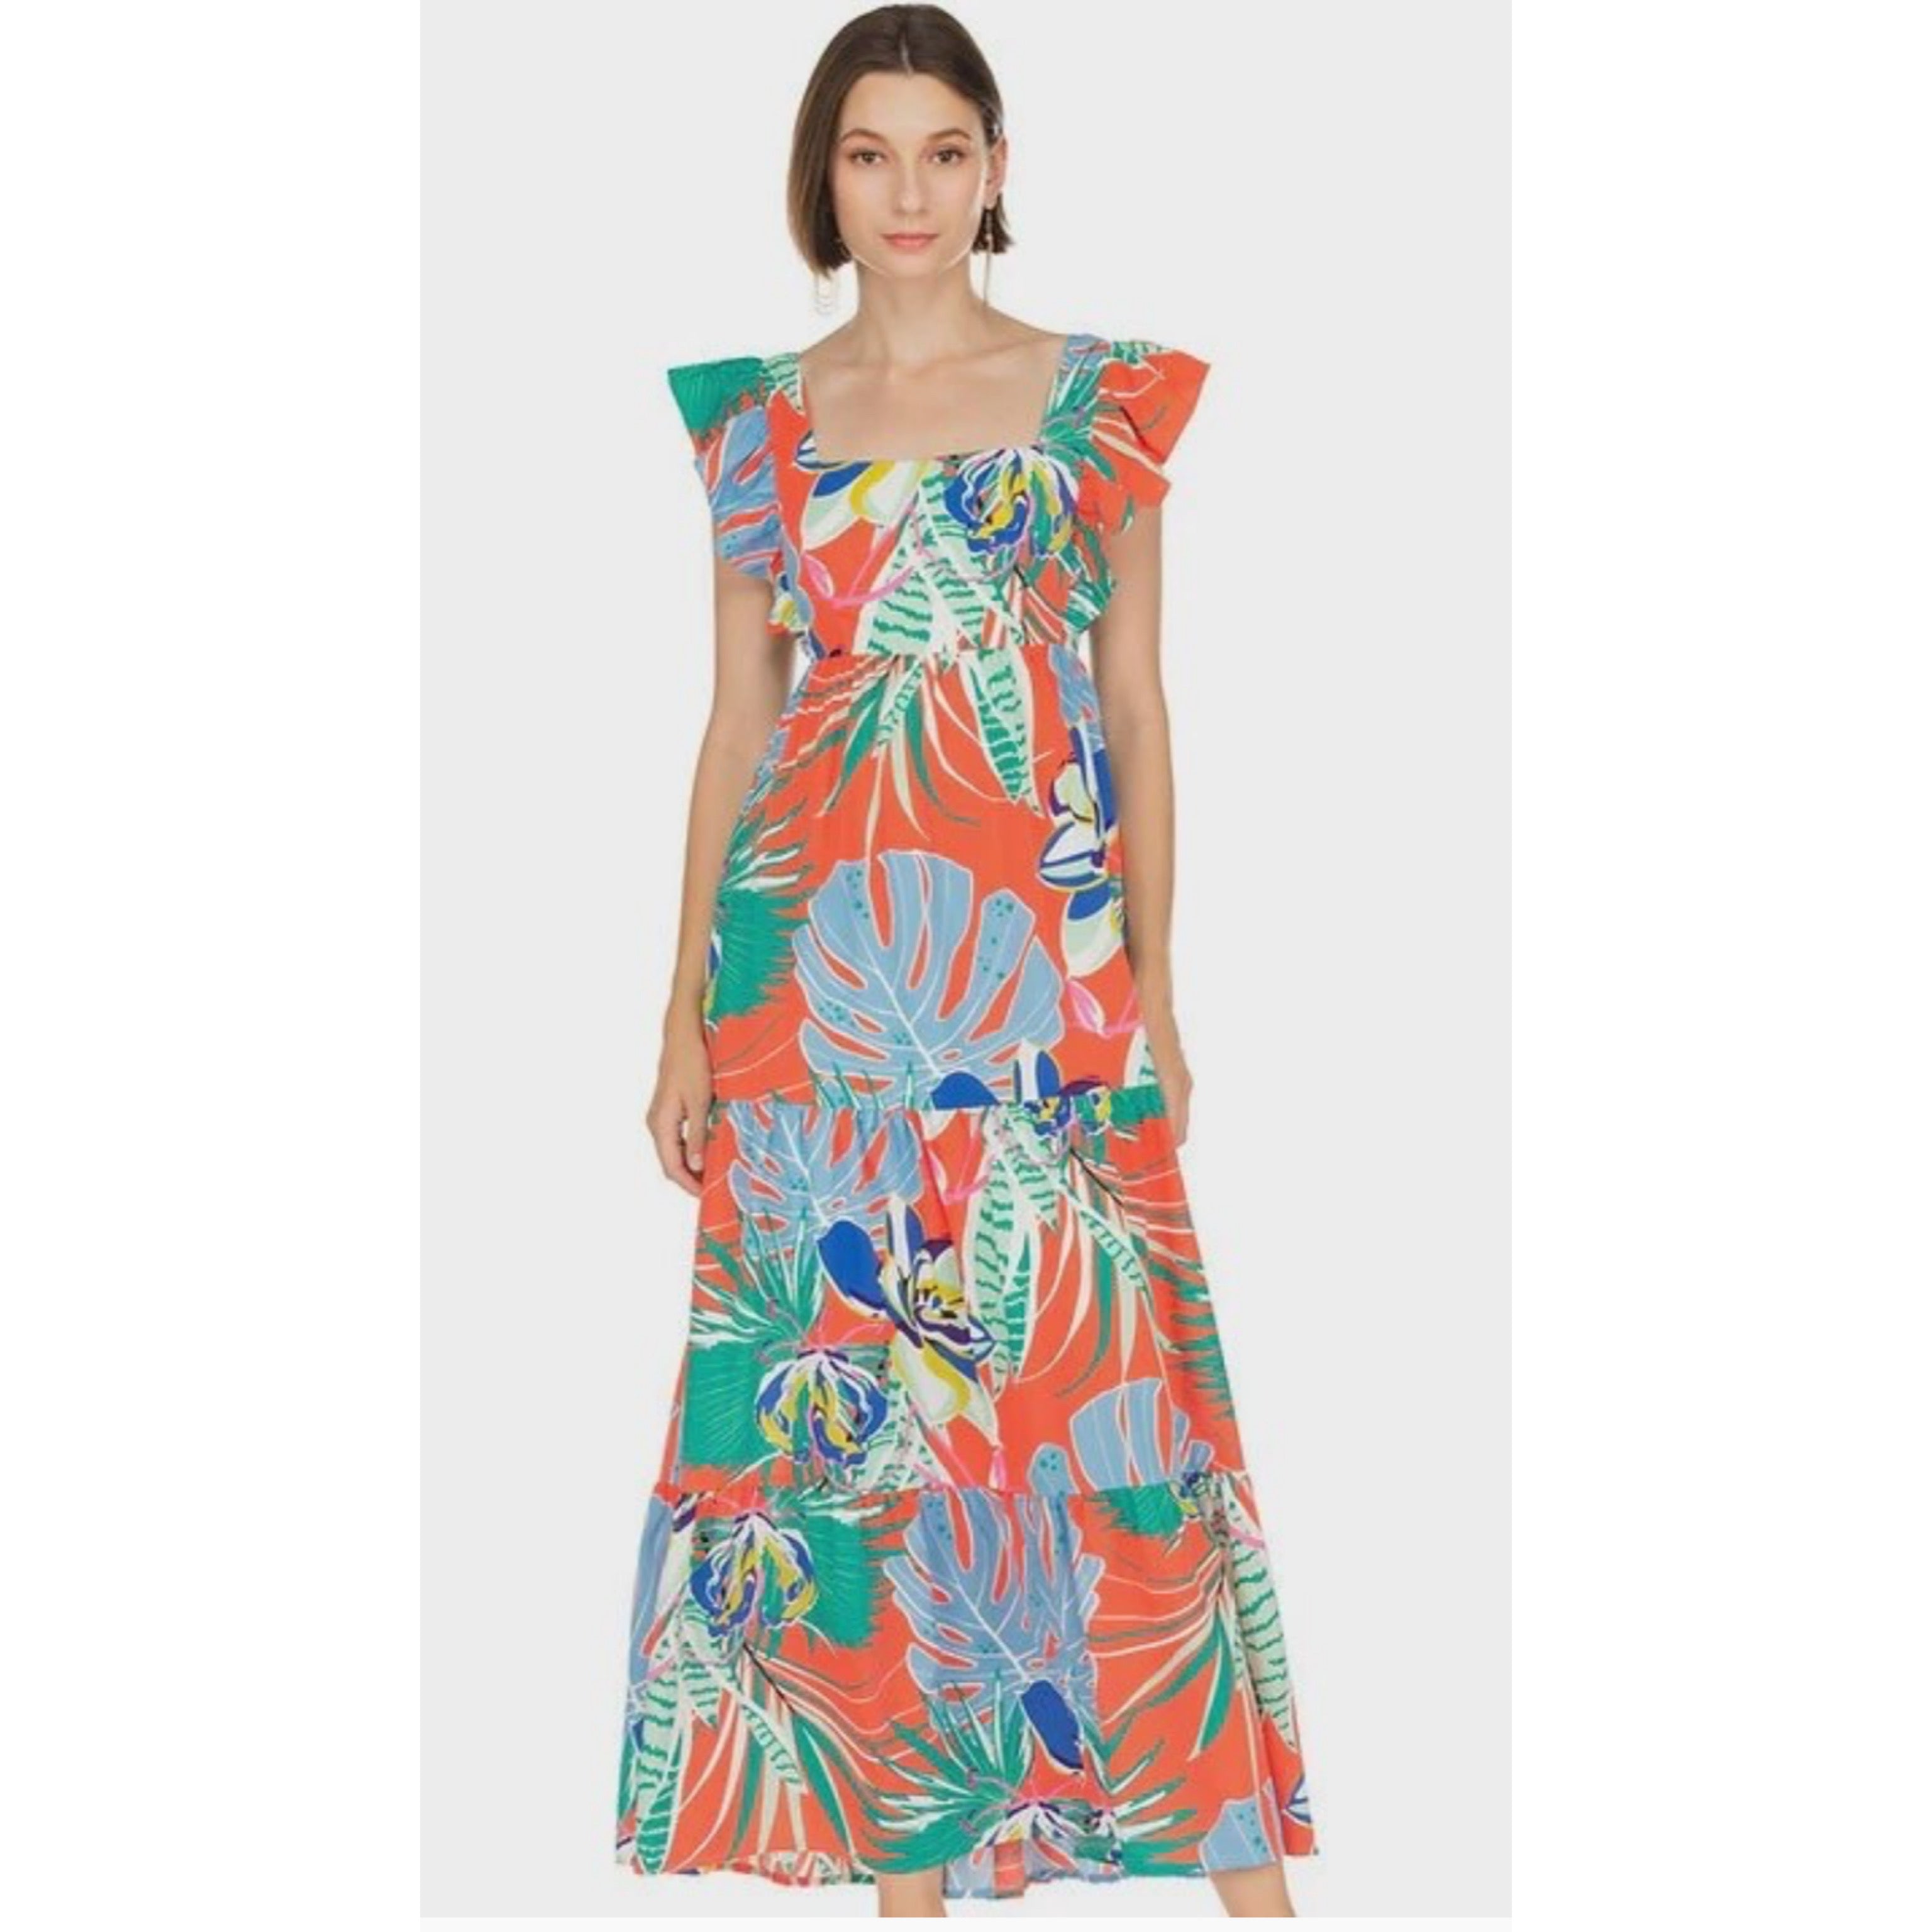 Jade coral print maxi dress, size S